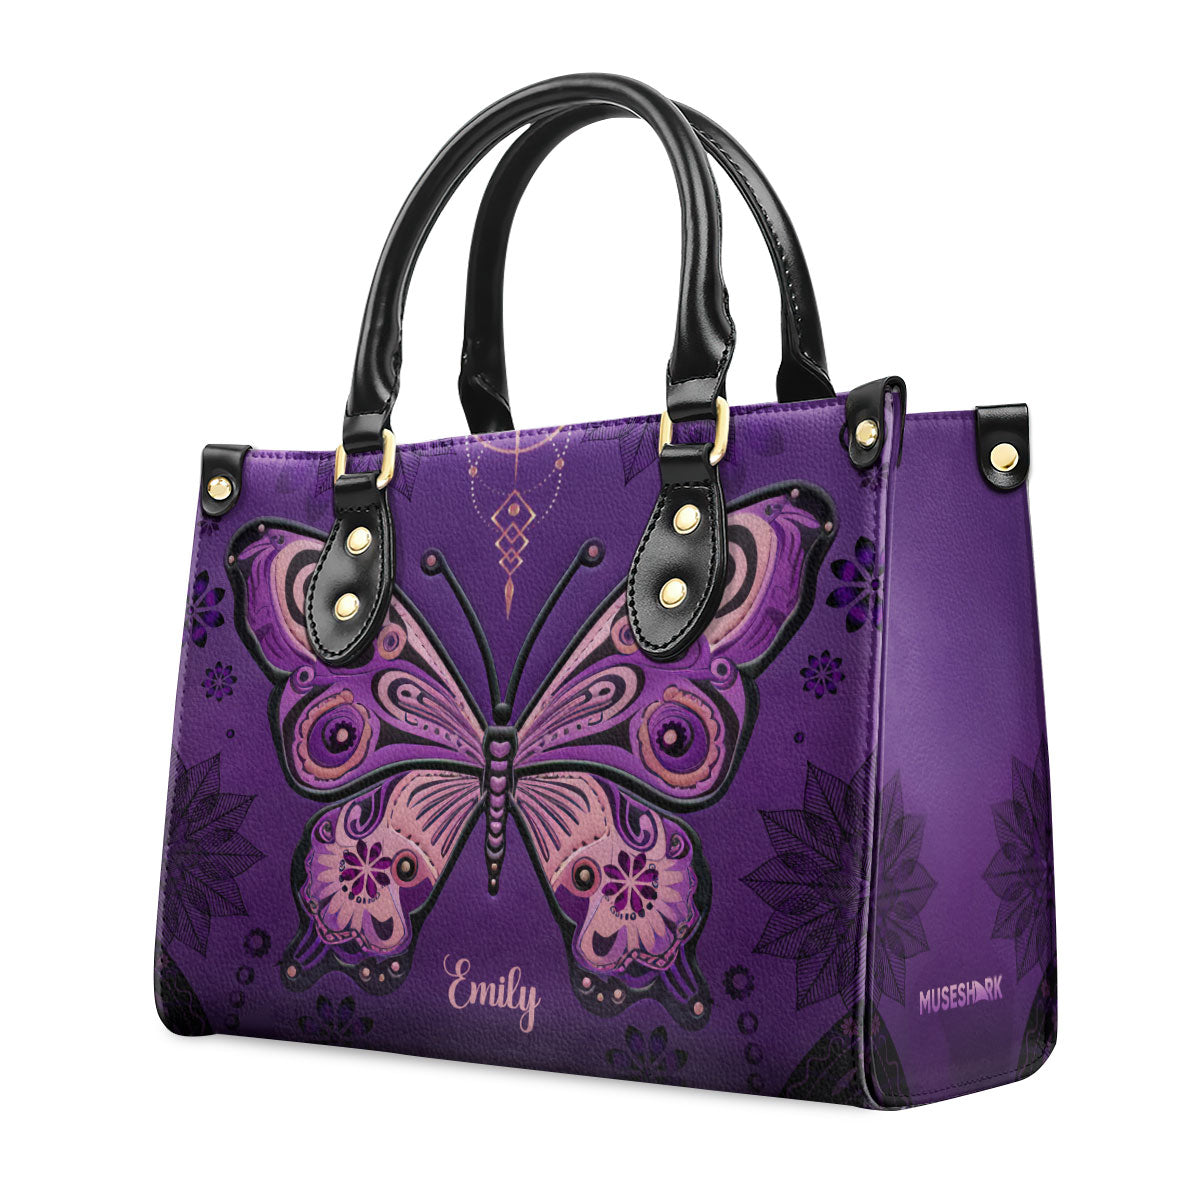 The Maneadero Purple Leather Handbag – Vinci Leather Shoes